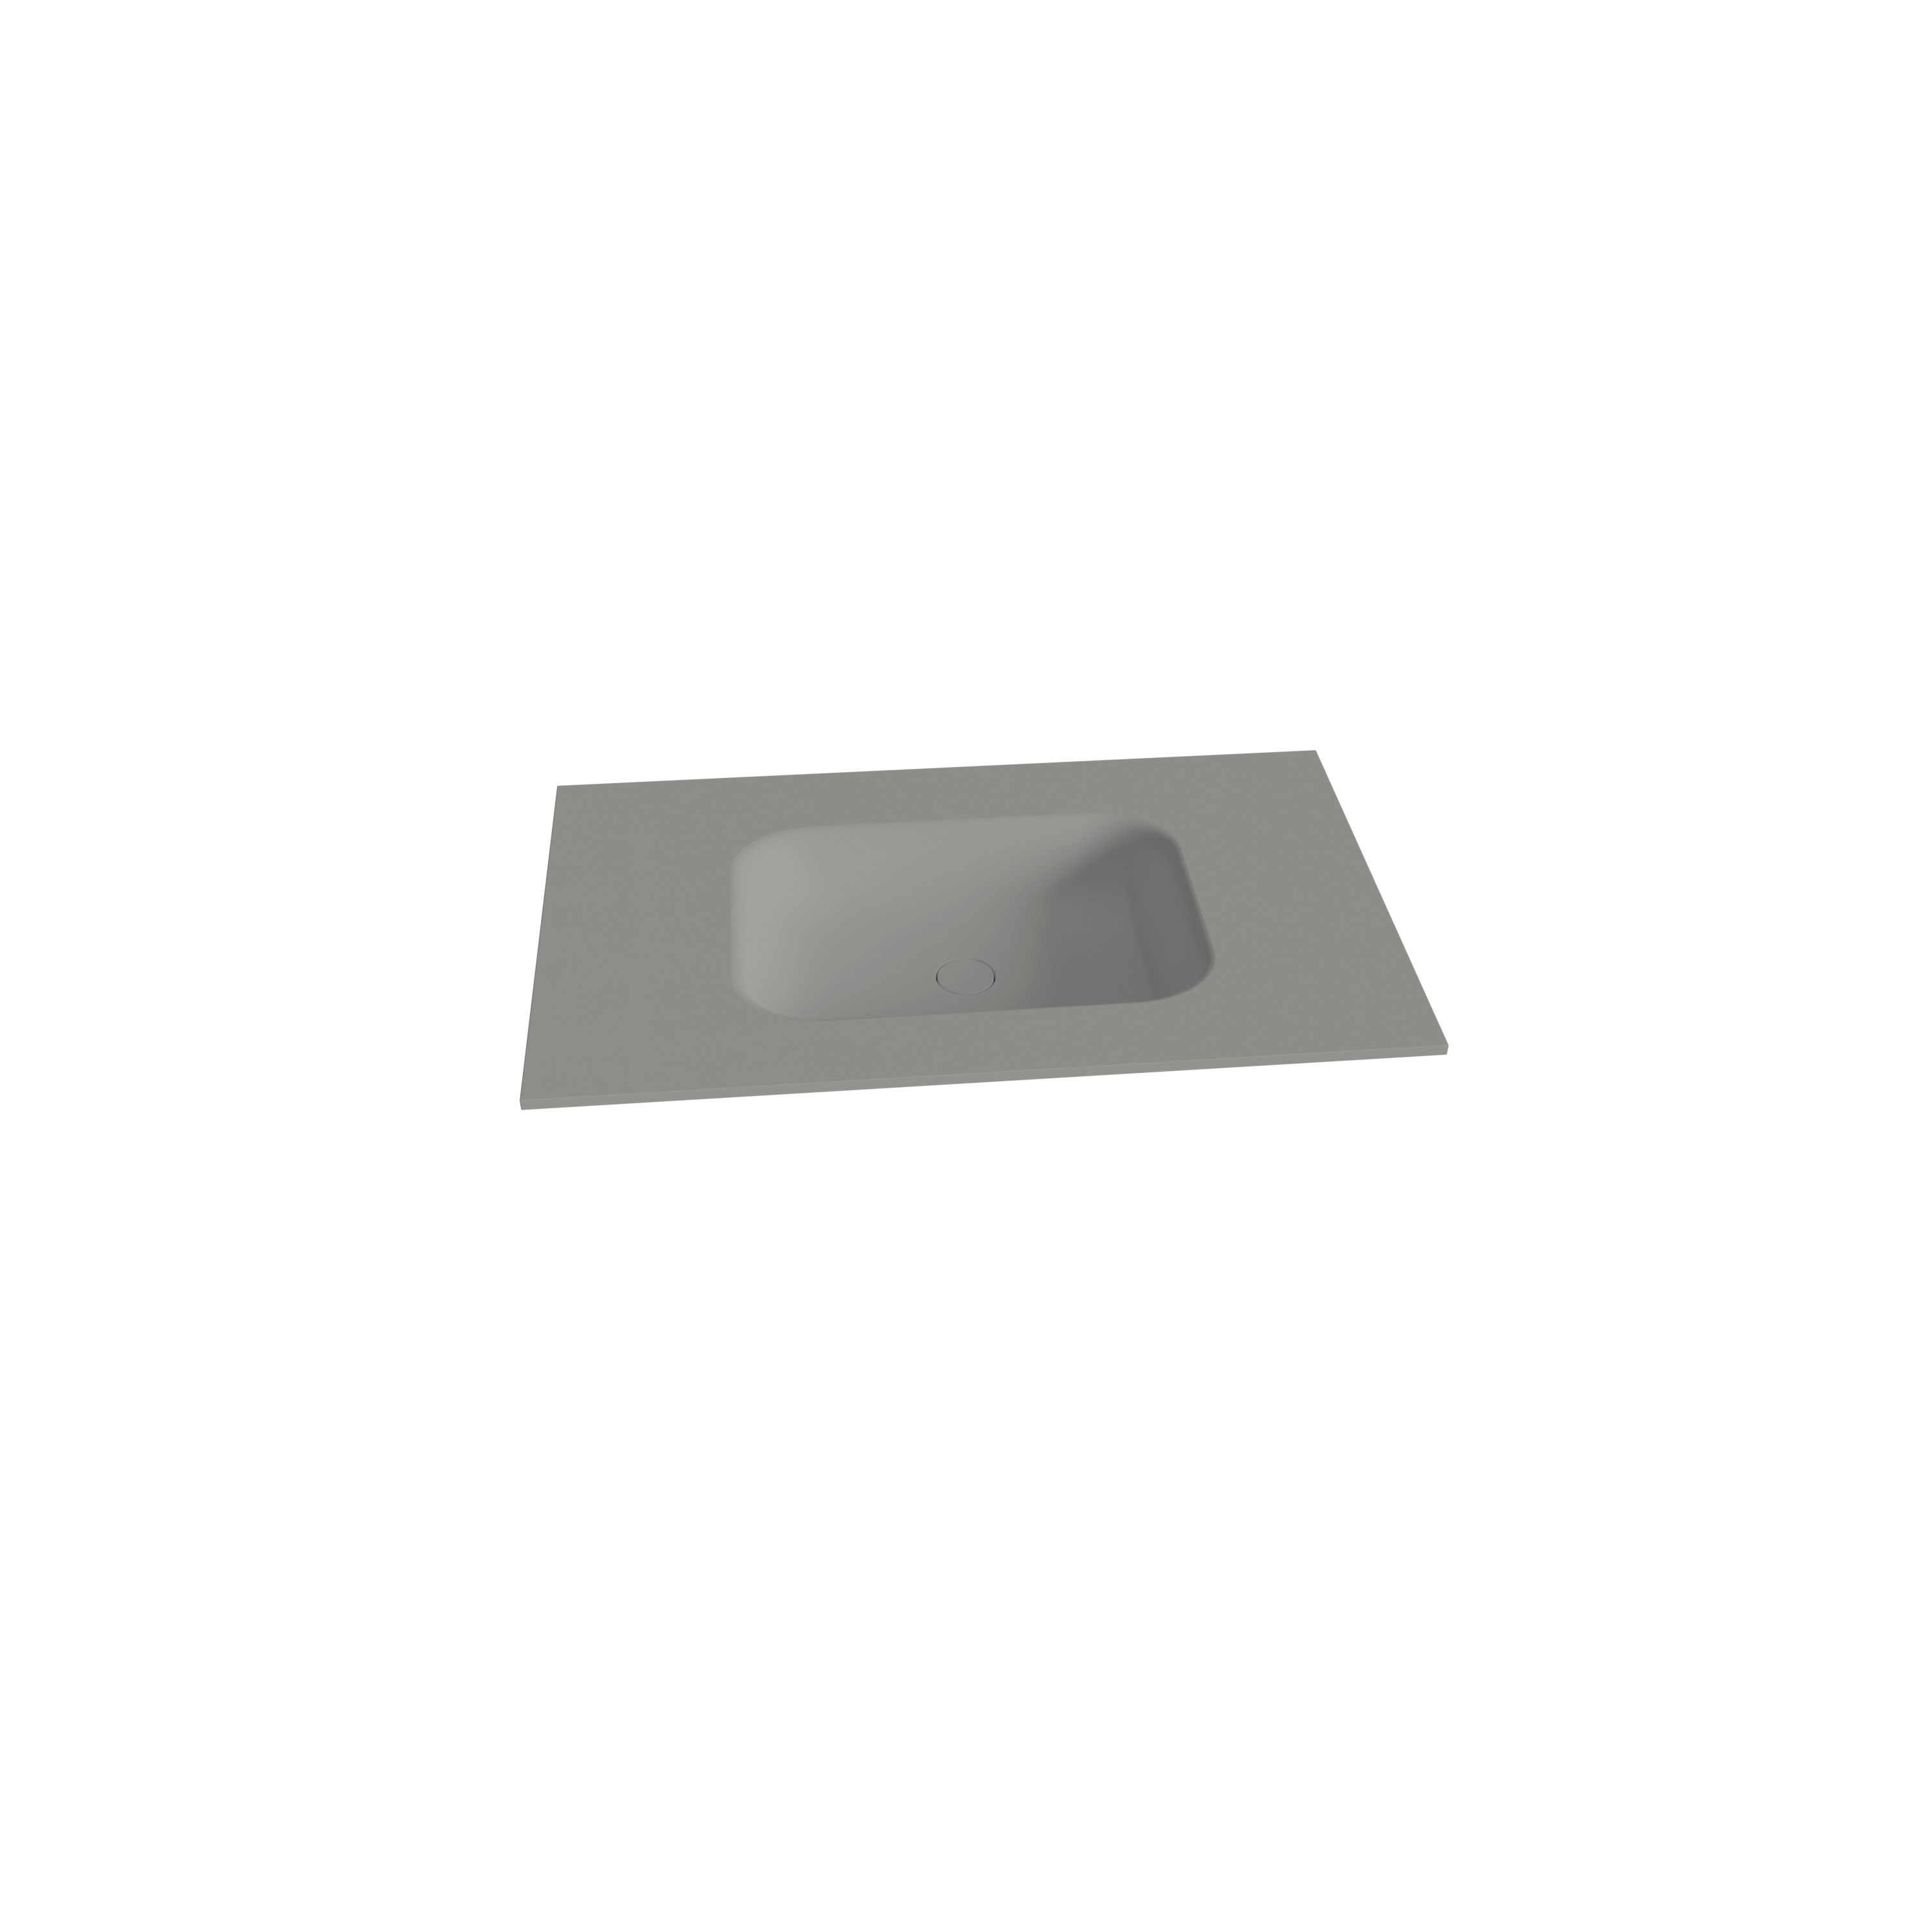 Balmani Balmani Tablo Arcato enkele wastafel met afvoerplug mat steengrijze Solid Surface 90 x 55 cm